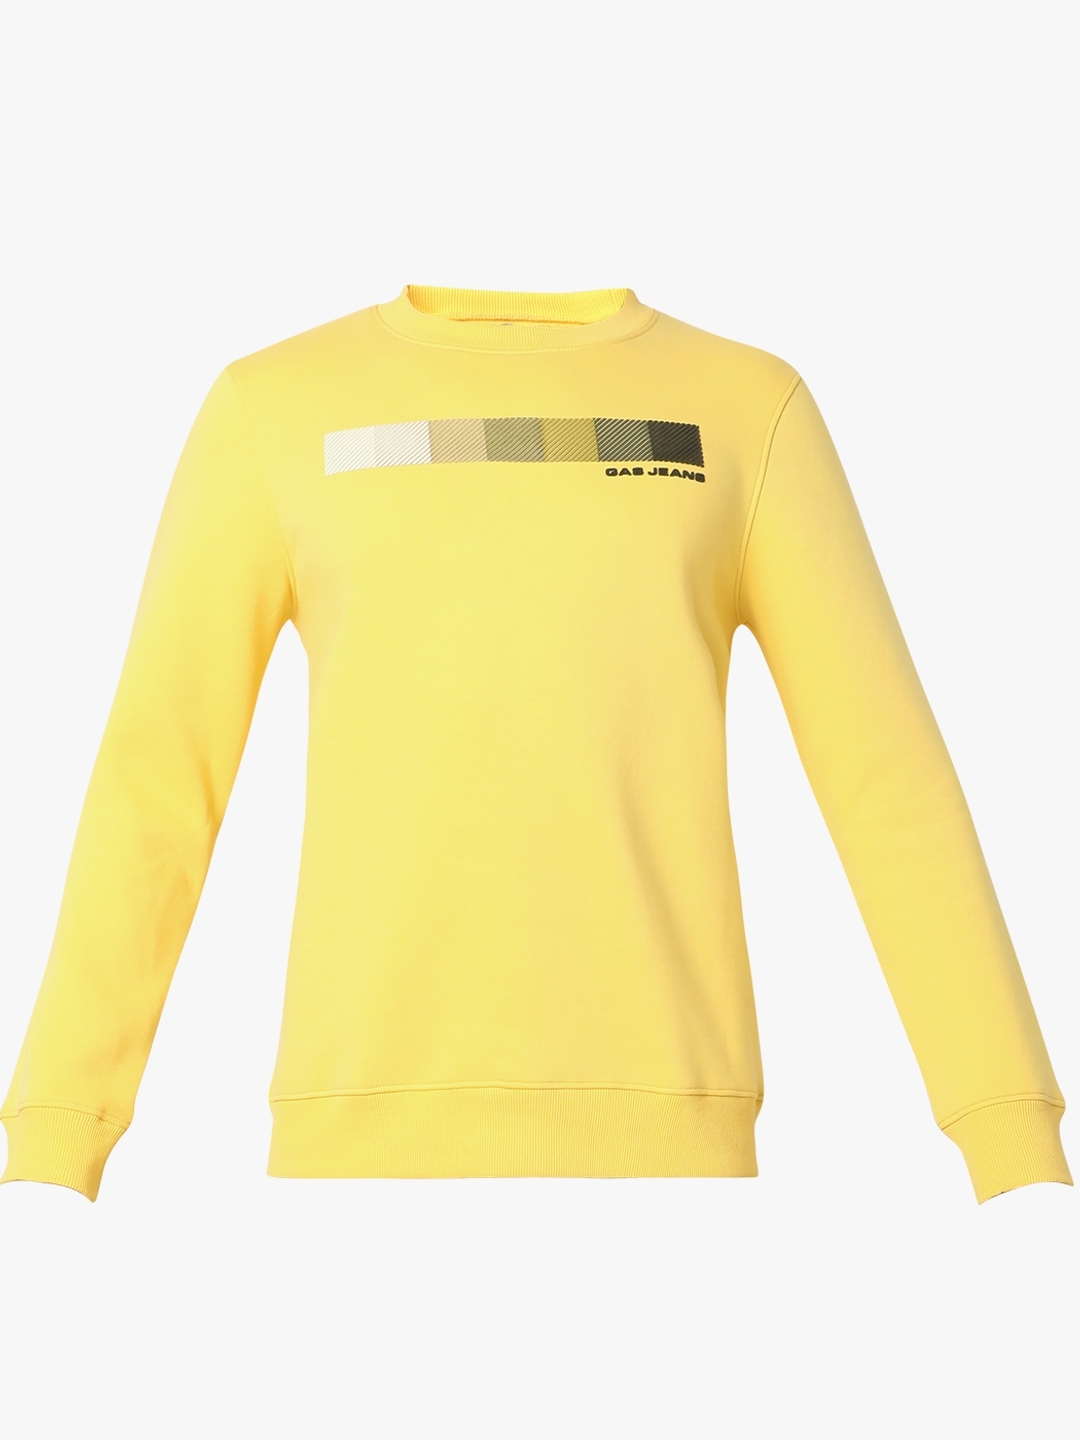 Regular Fit Full Sleeve Rib Neck Graphic Polycotton Sweatshirts